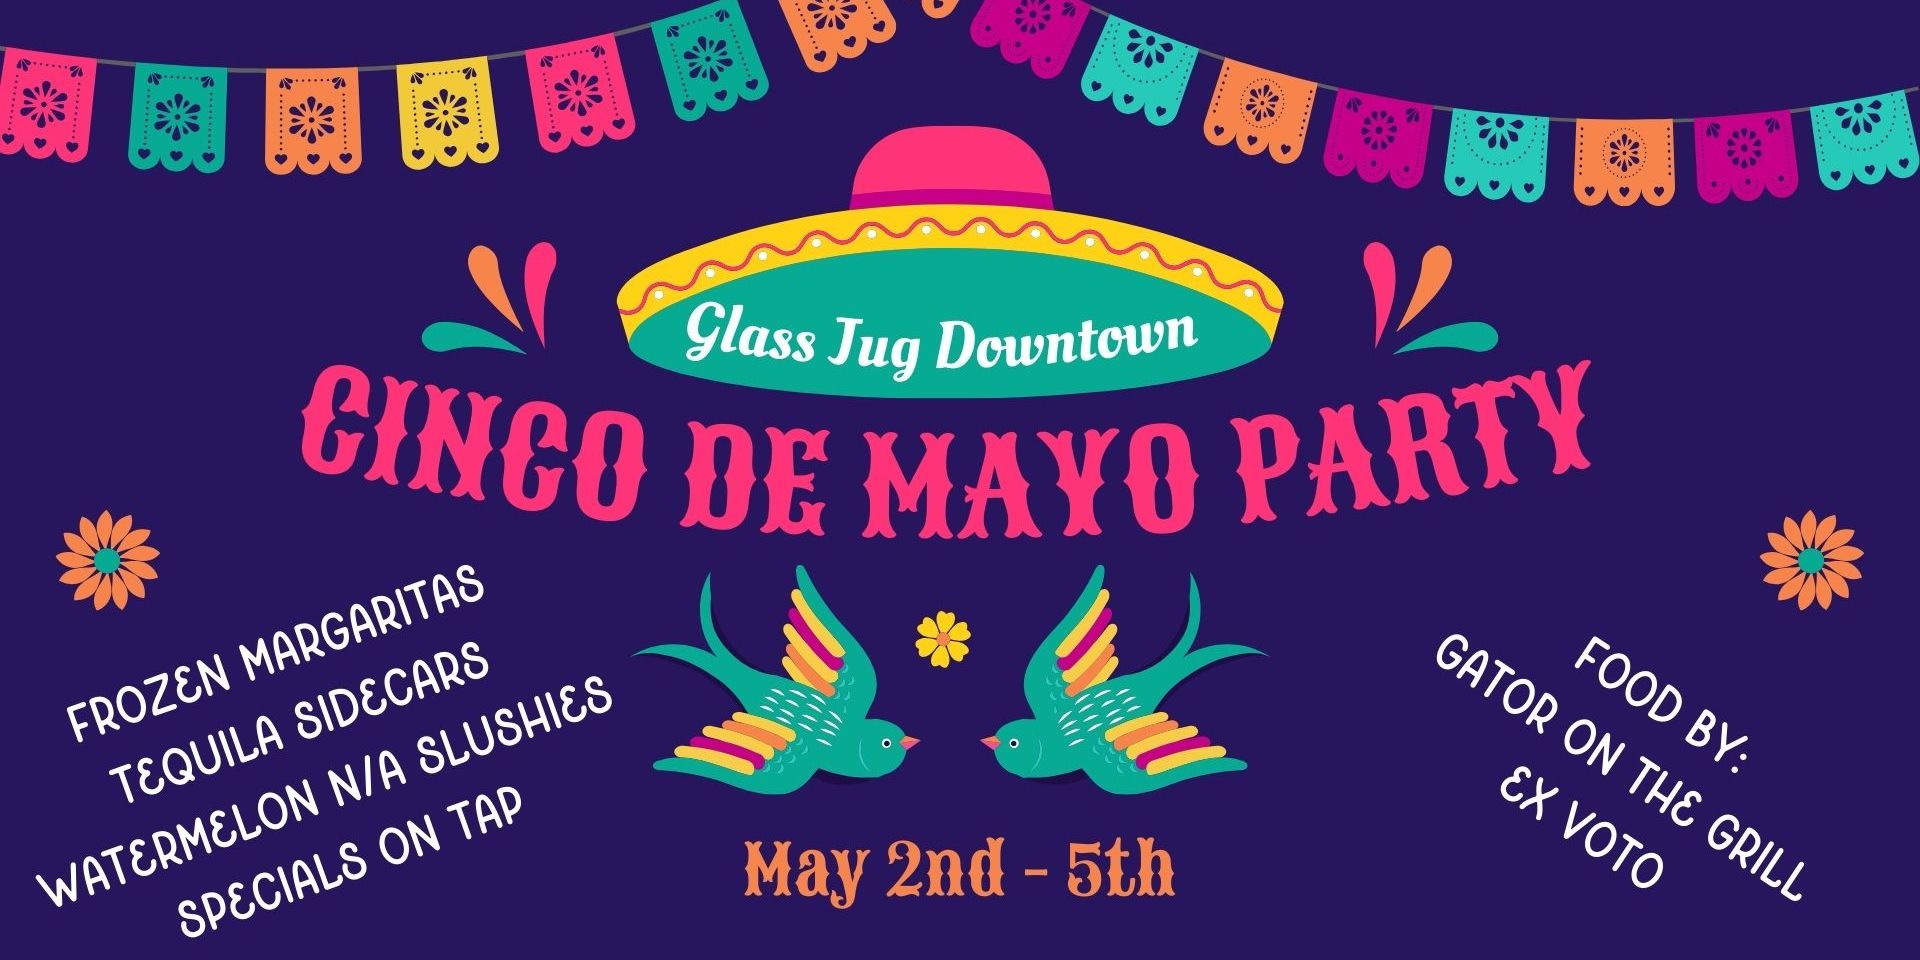 Cinco De Mayo Party promotional image